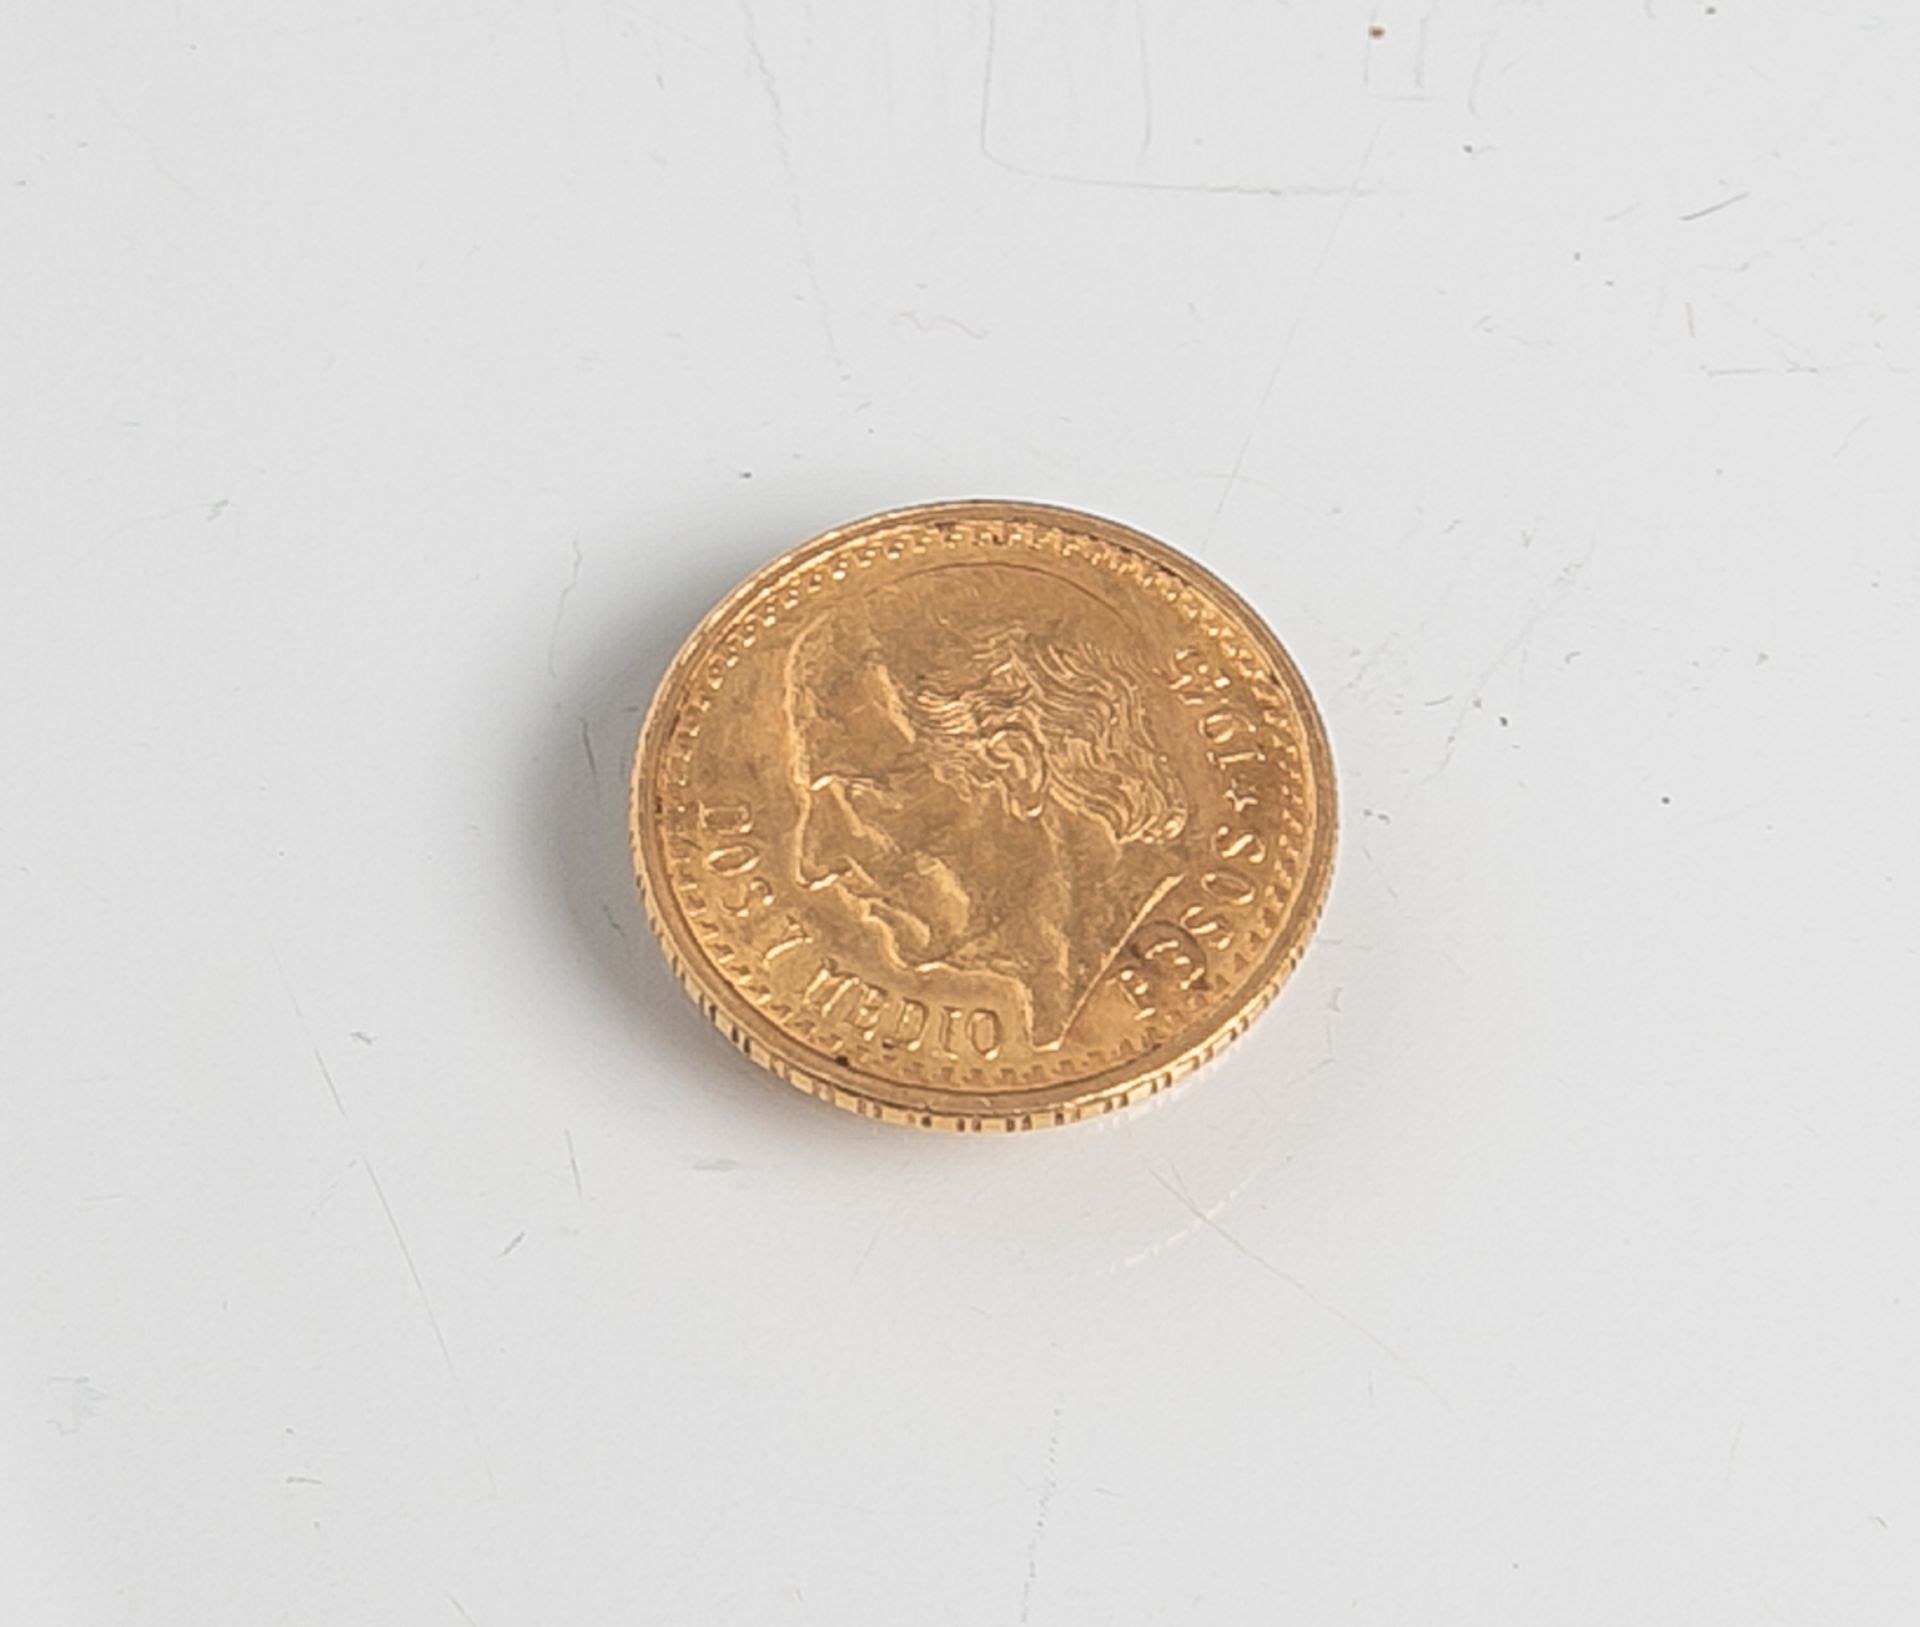 Goldmünze, Mexiko, 1 Peso, 1945, ca. 2,10 g. Altersgem. Zustand.- - -21.00 % buyer's premium on